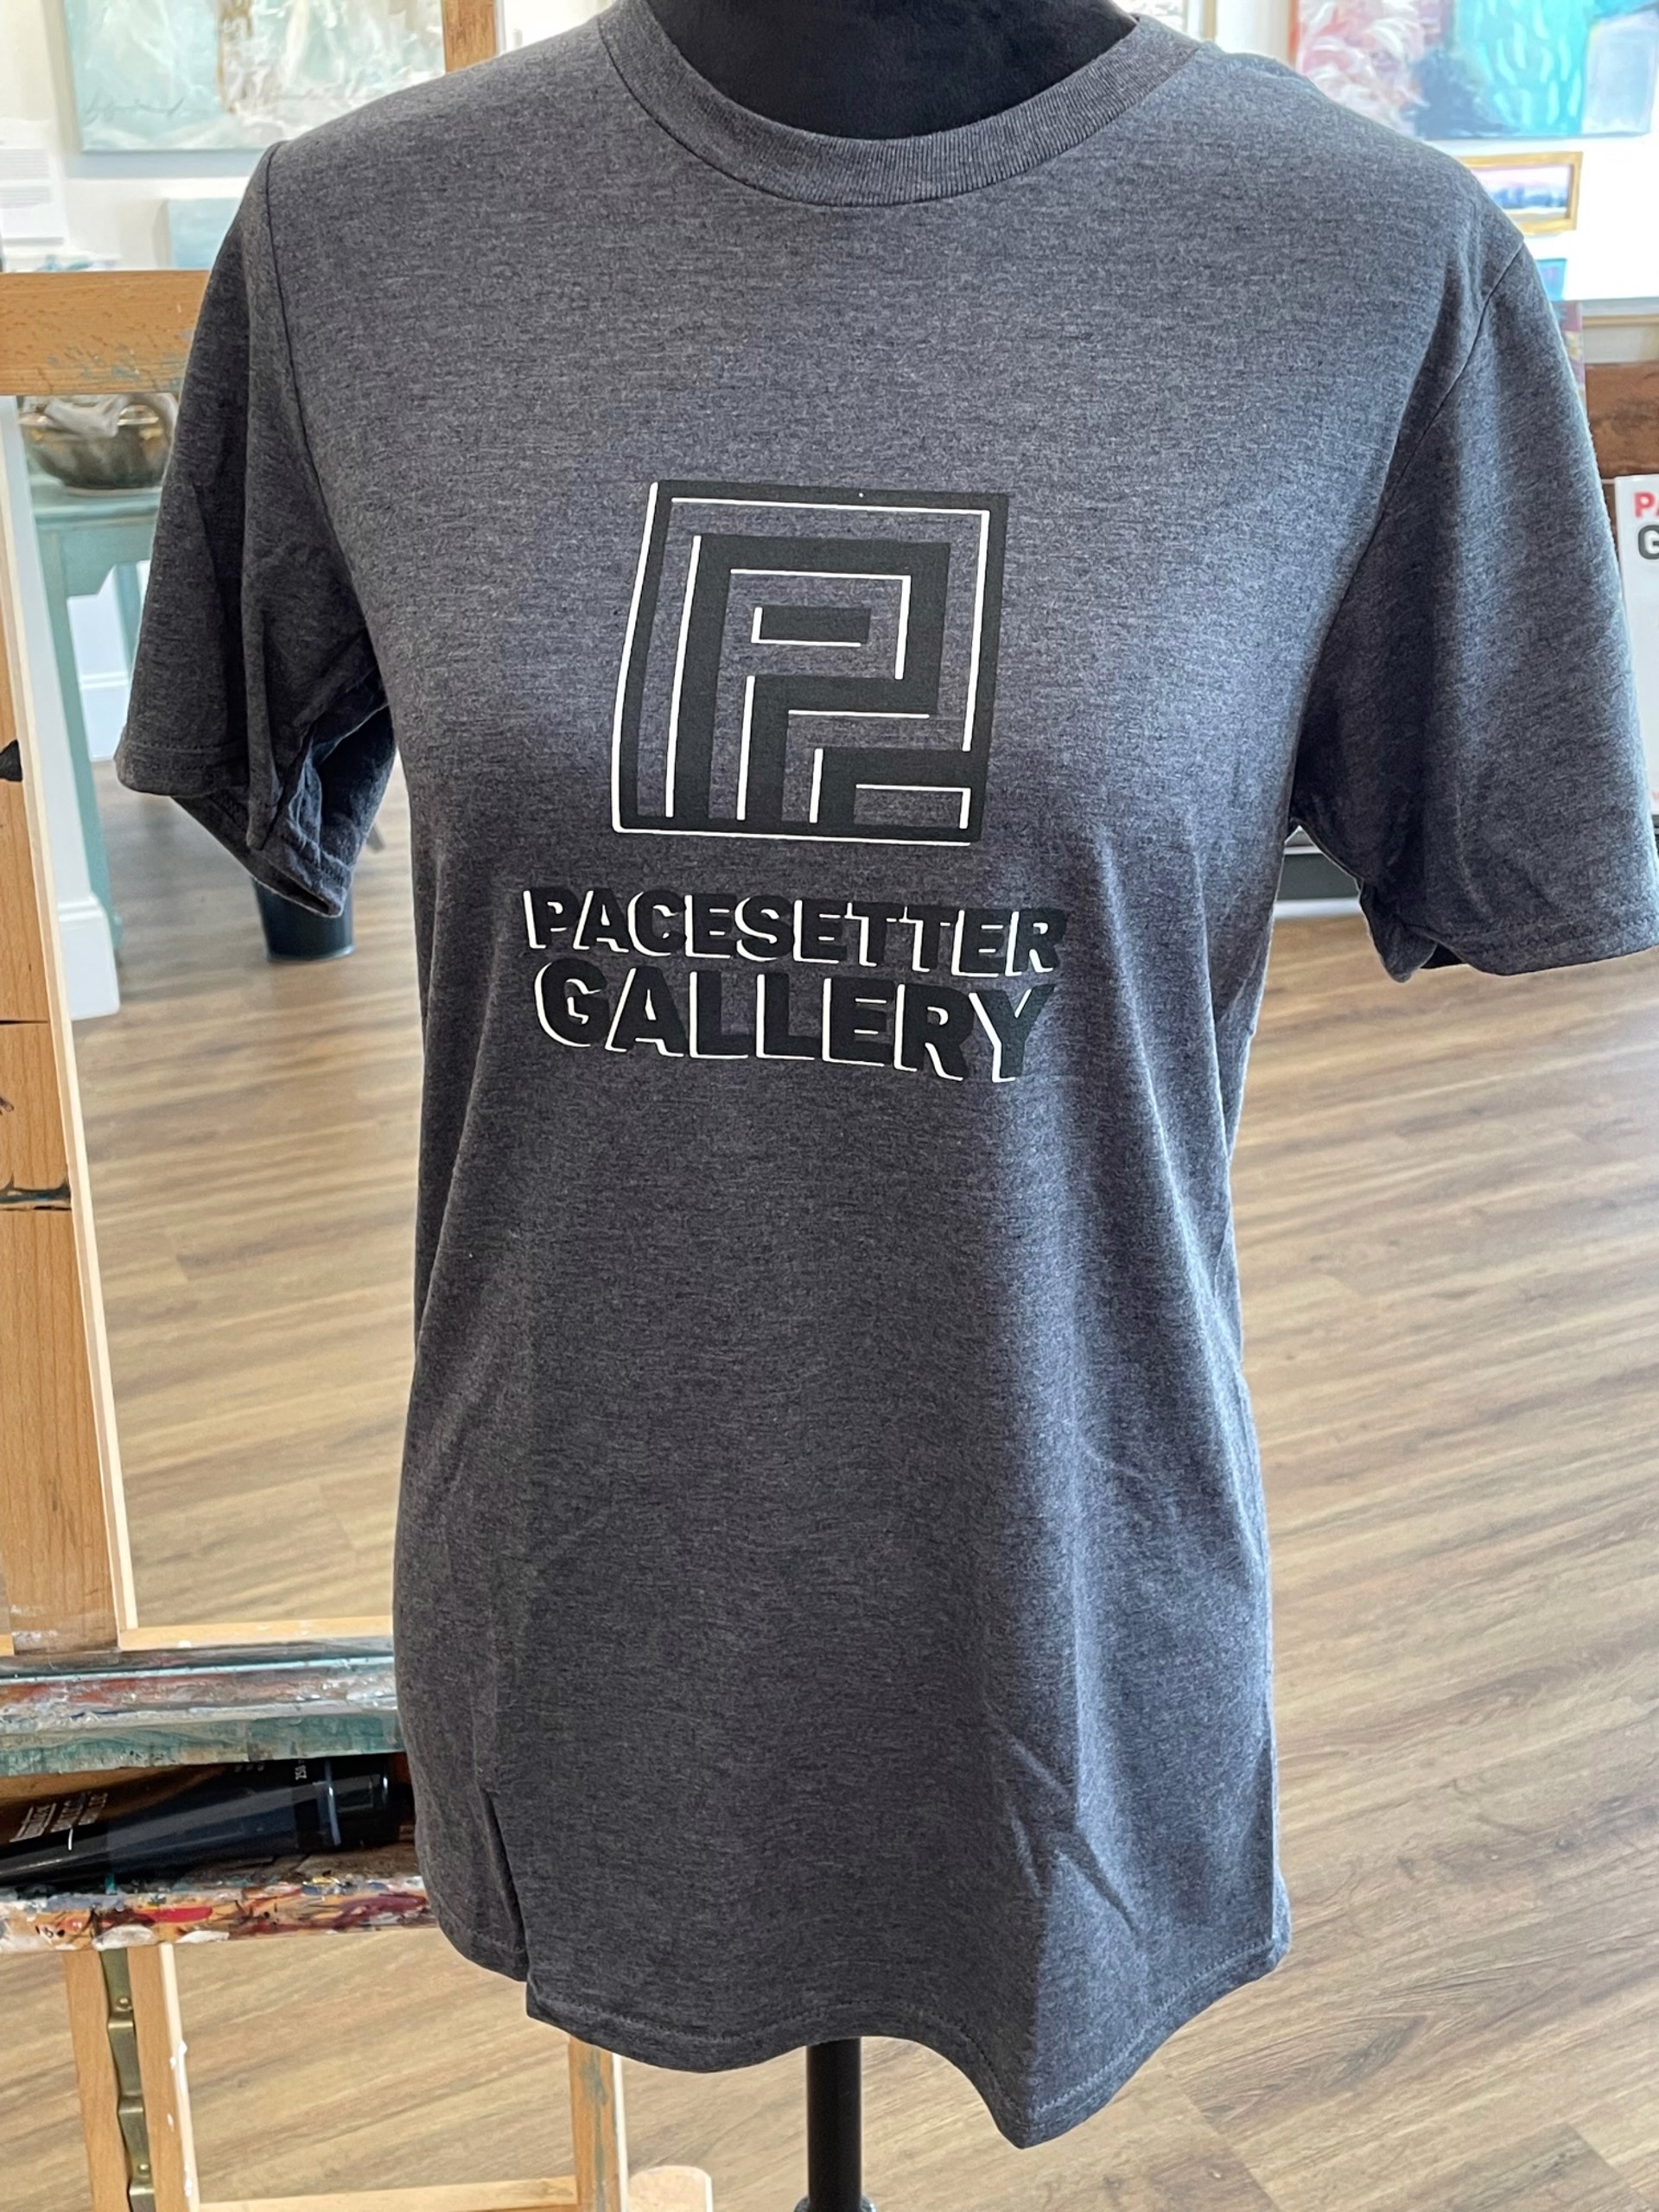 Pacesetter Gallery Unisex T-Shirt (Medium) by Pacesetter Merchandise